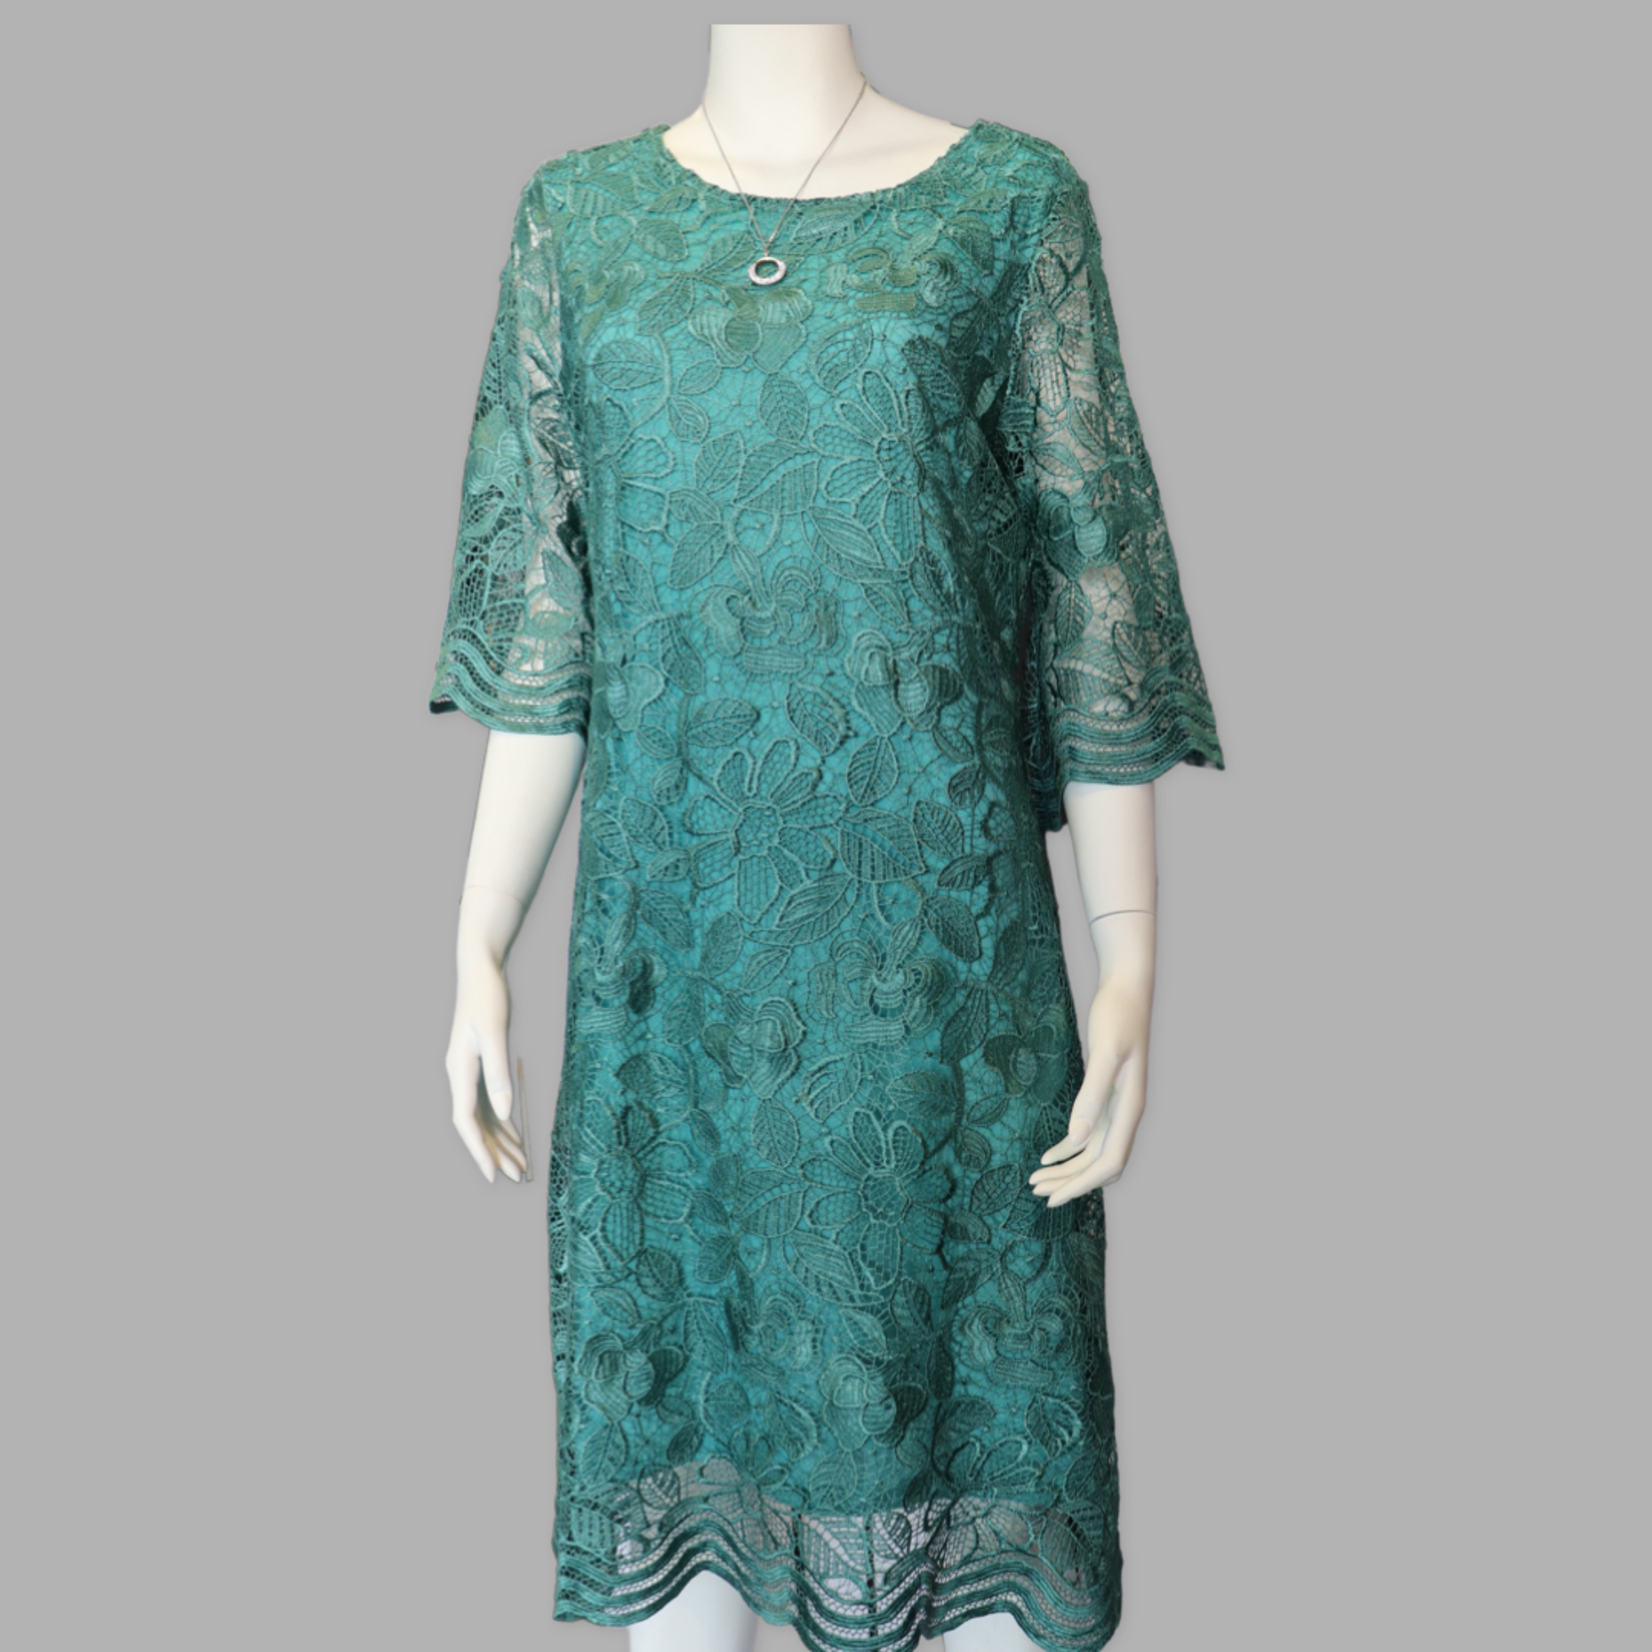 Vivid International Emerald Soft Lace 3/4 Sleeve Dress